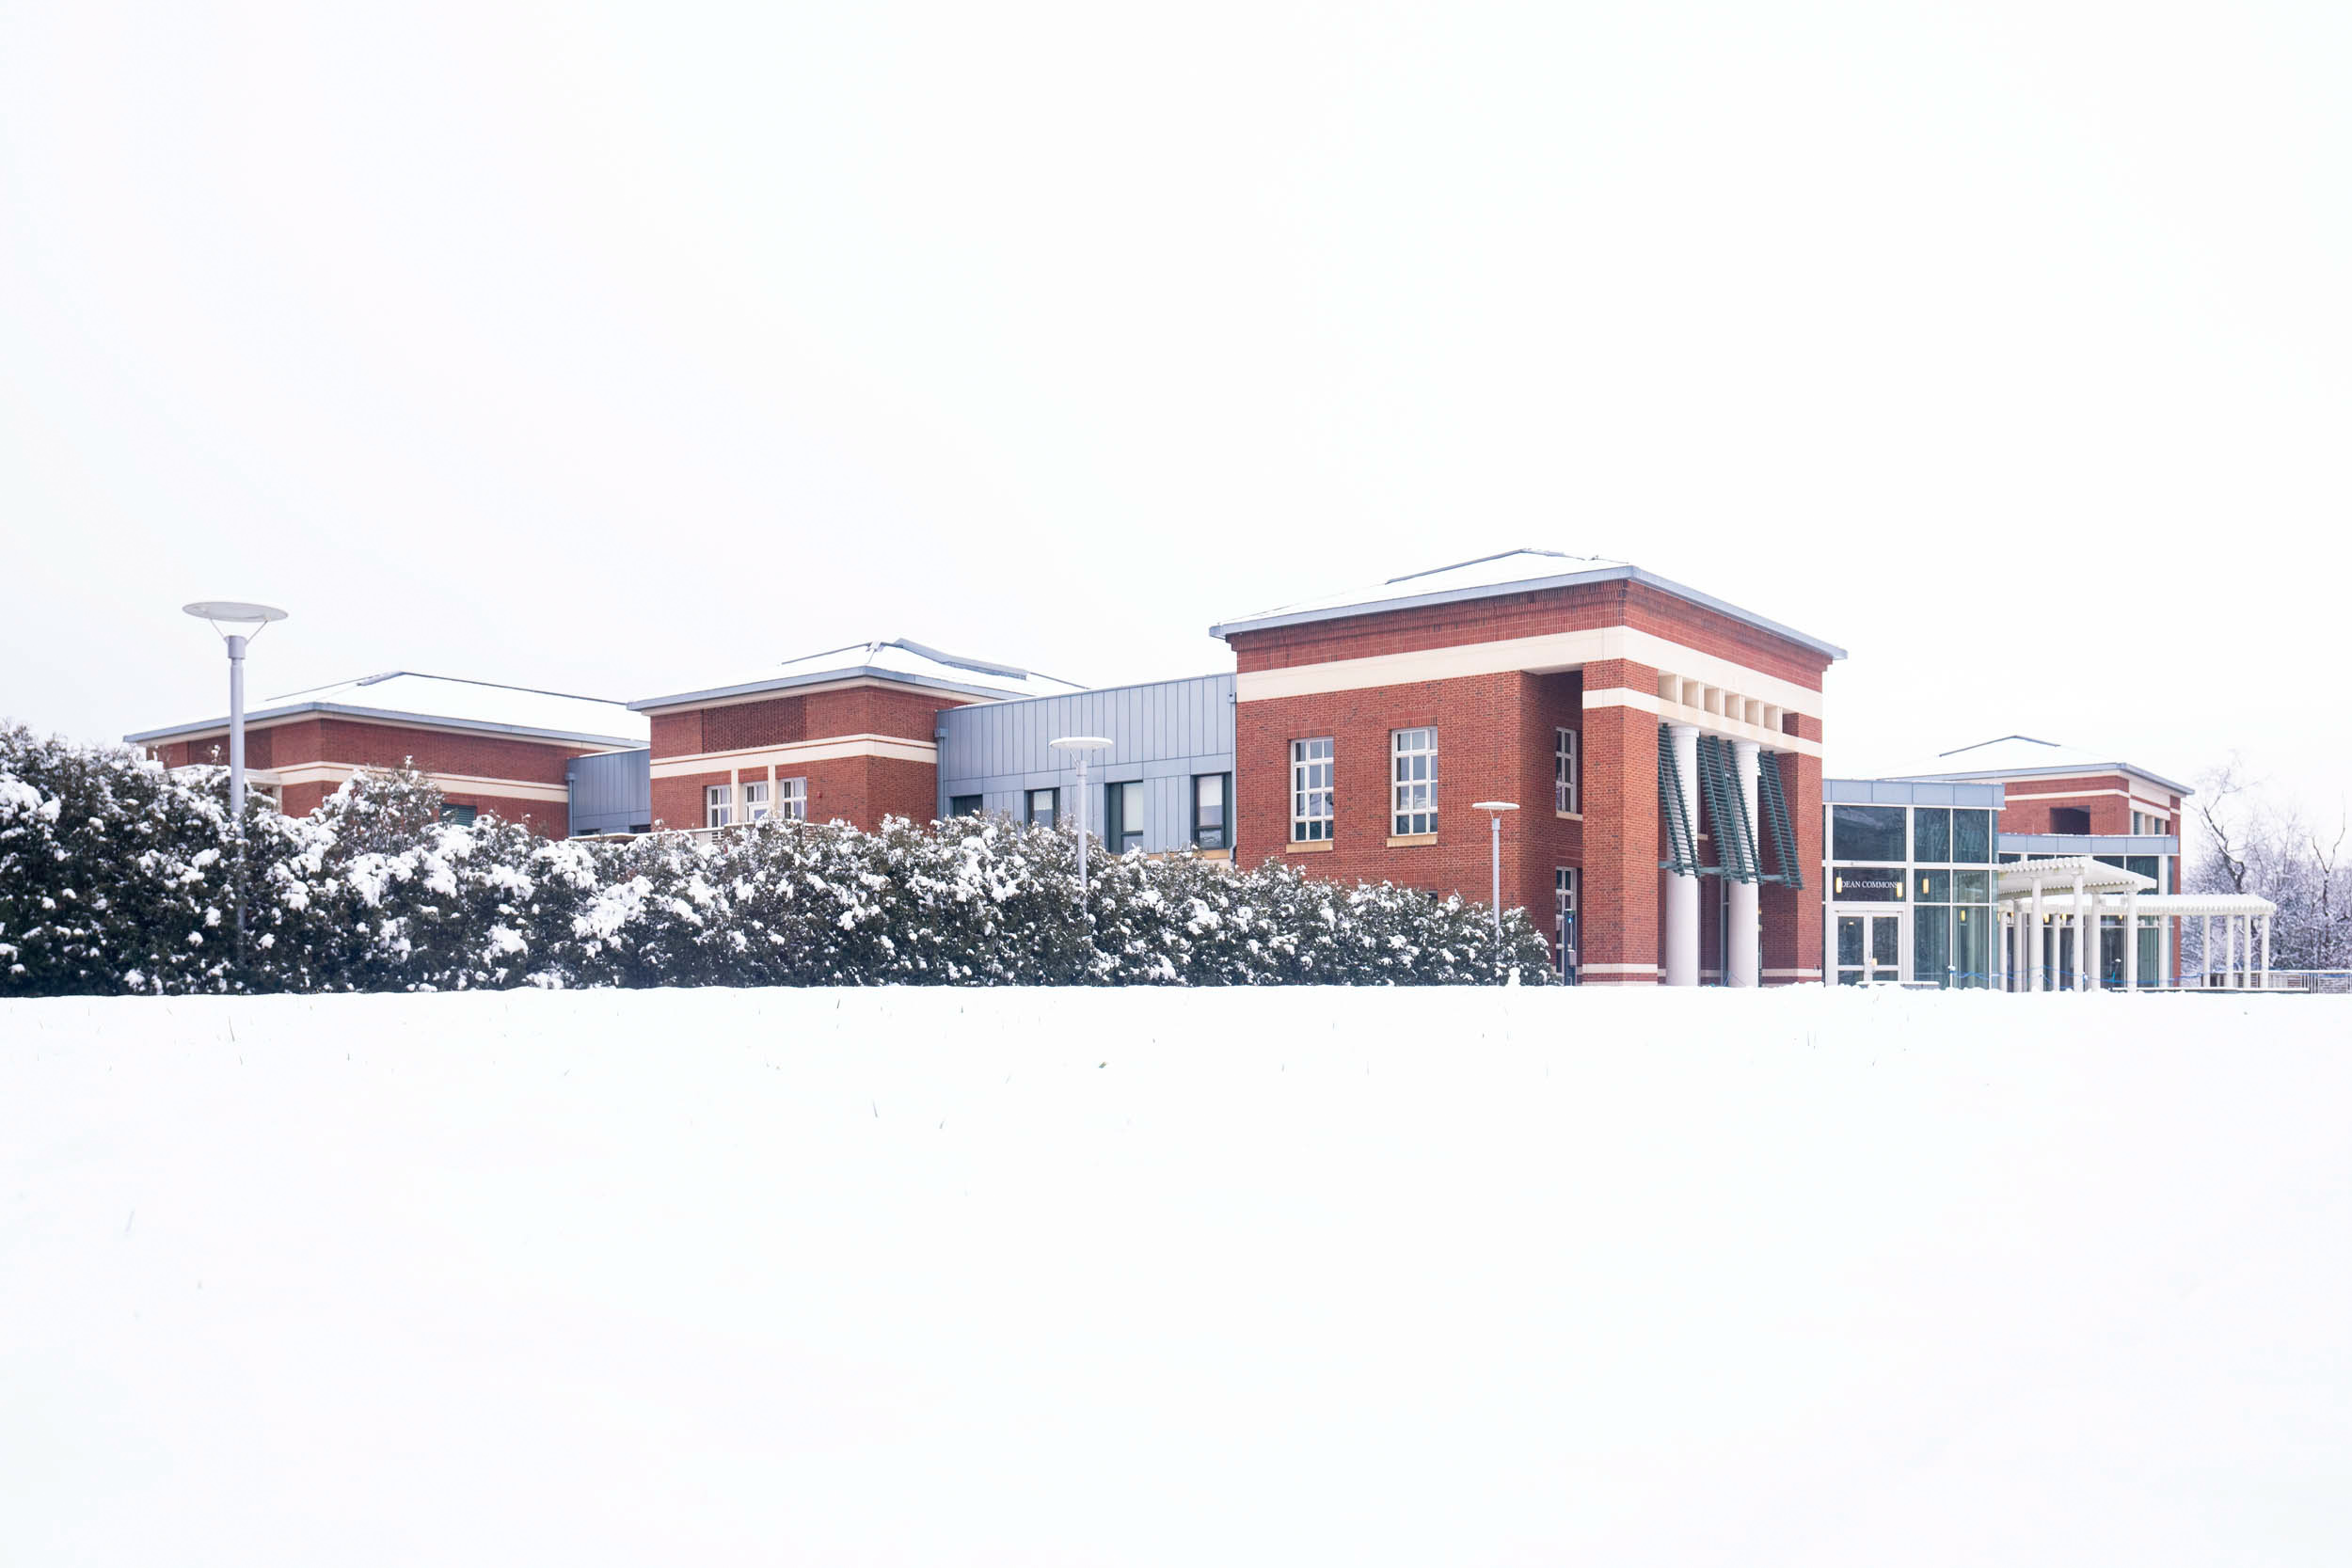 UVA building covered in snow